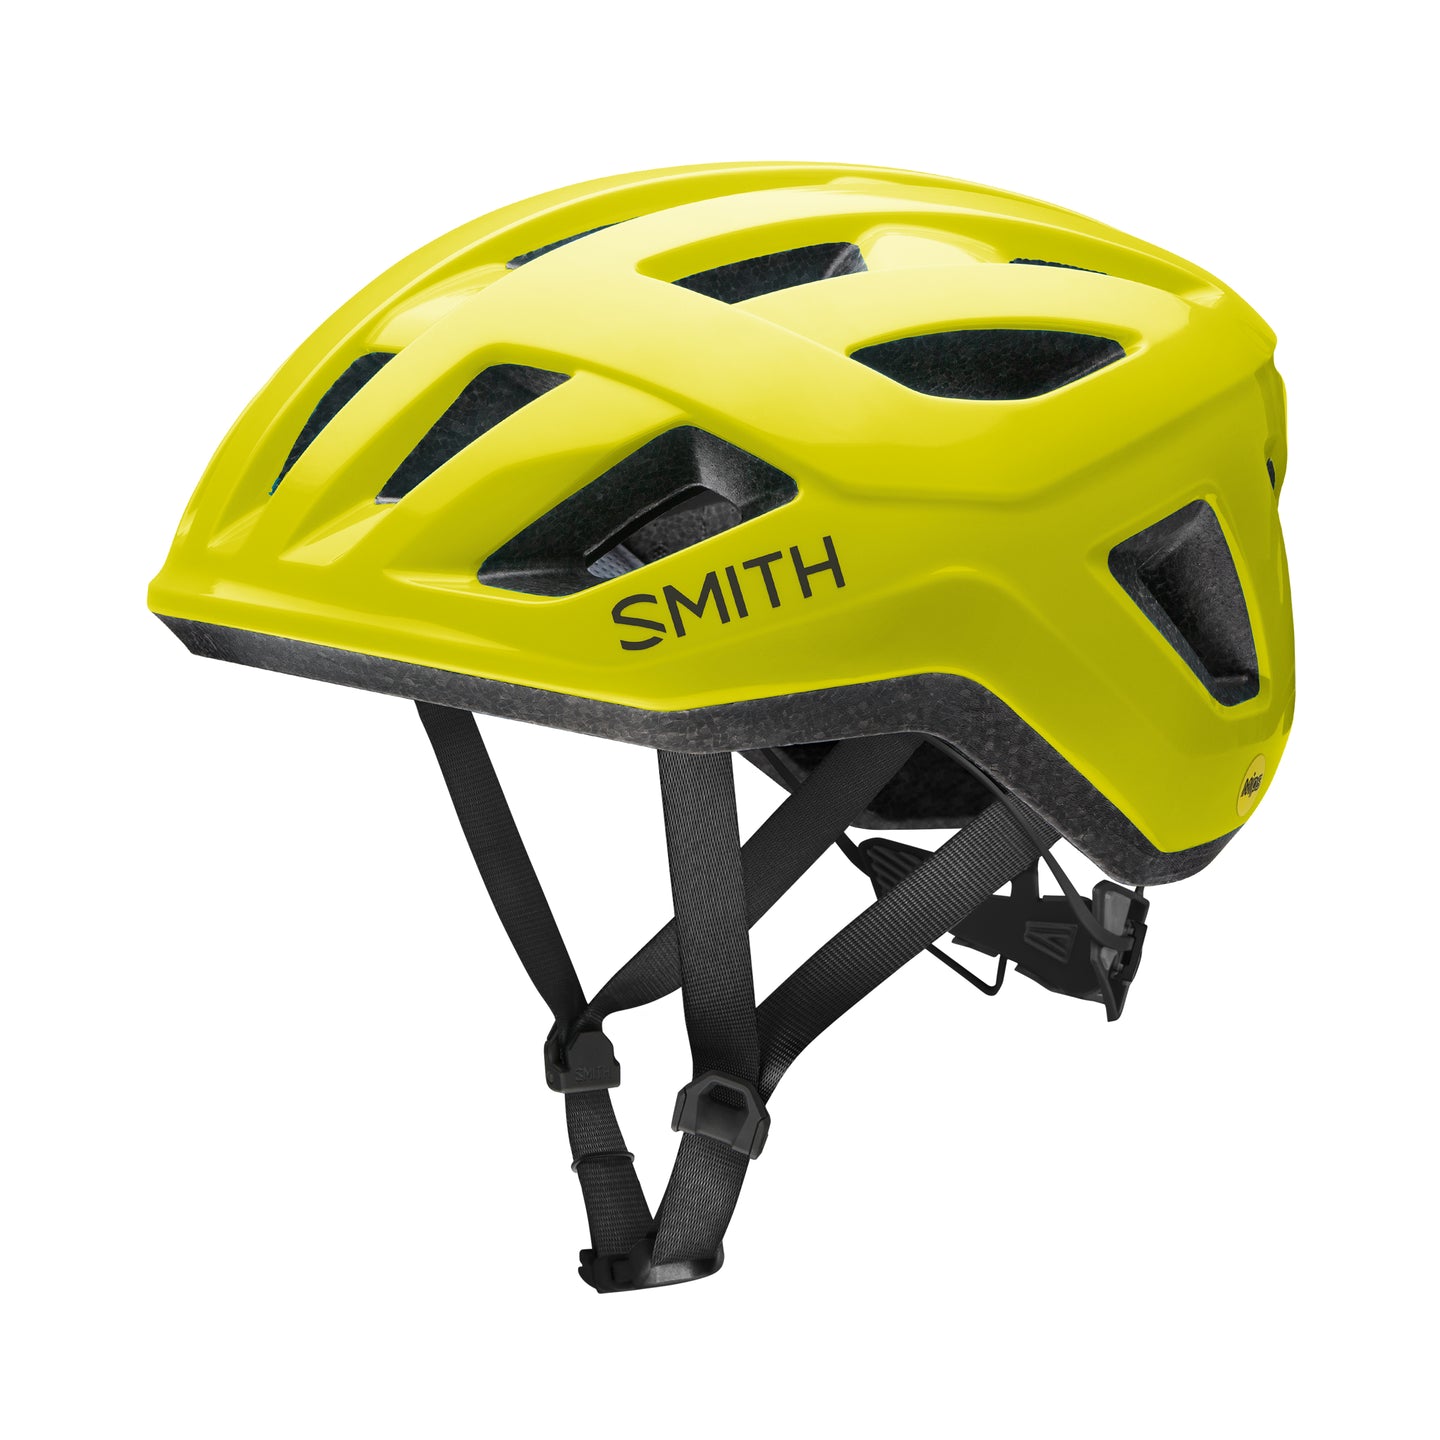 The Smith Signal Road Bike Helmet